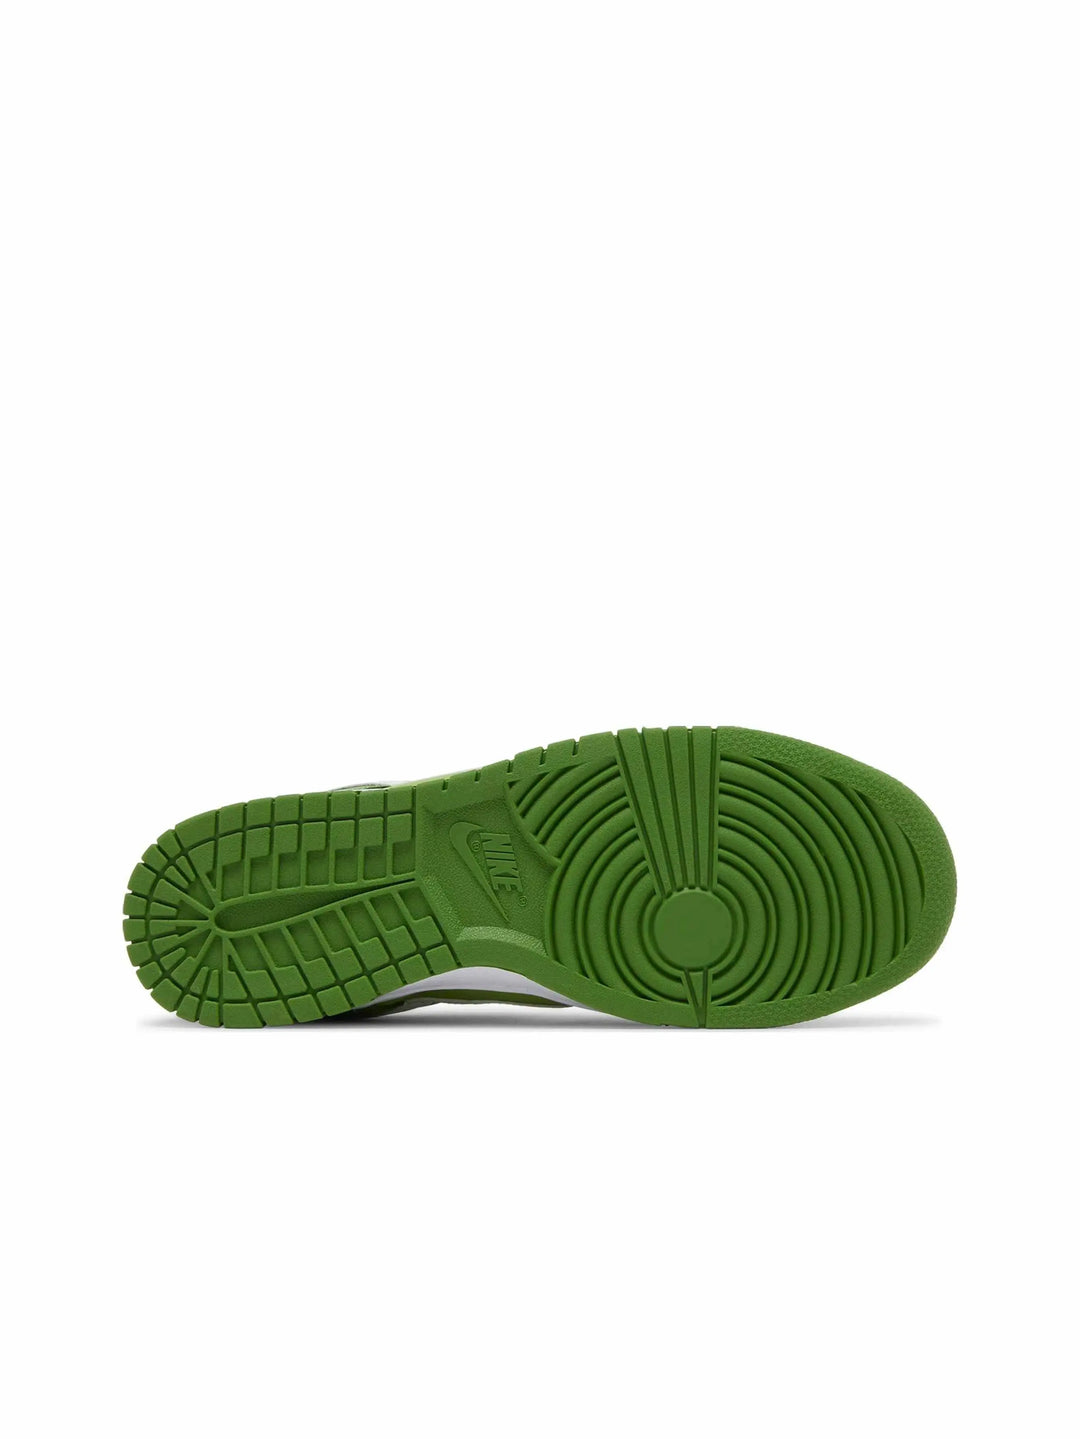 Nike Dunk Low Chlorophyll - Prior